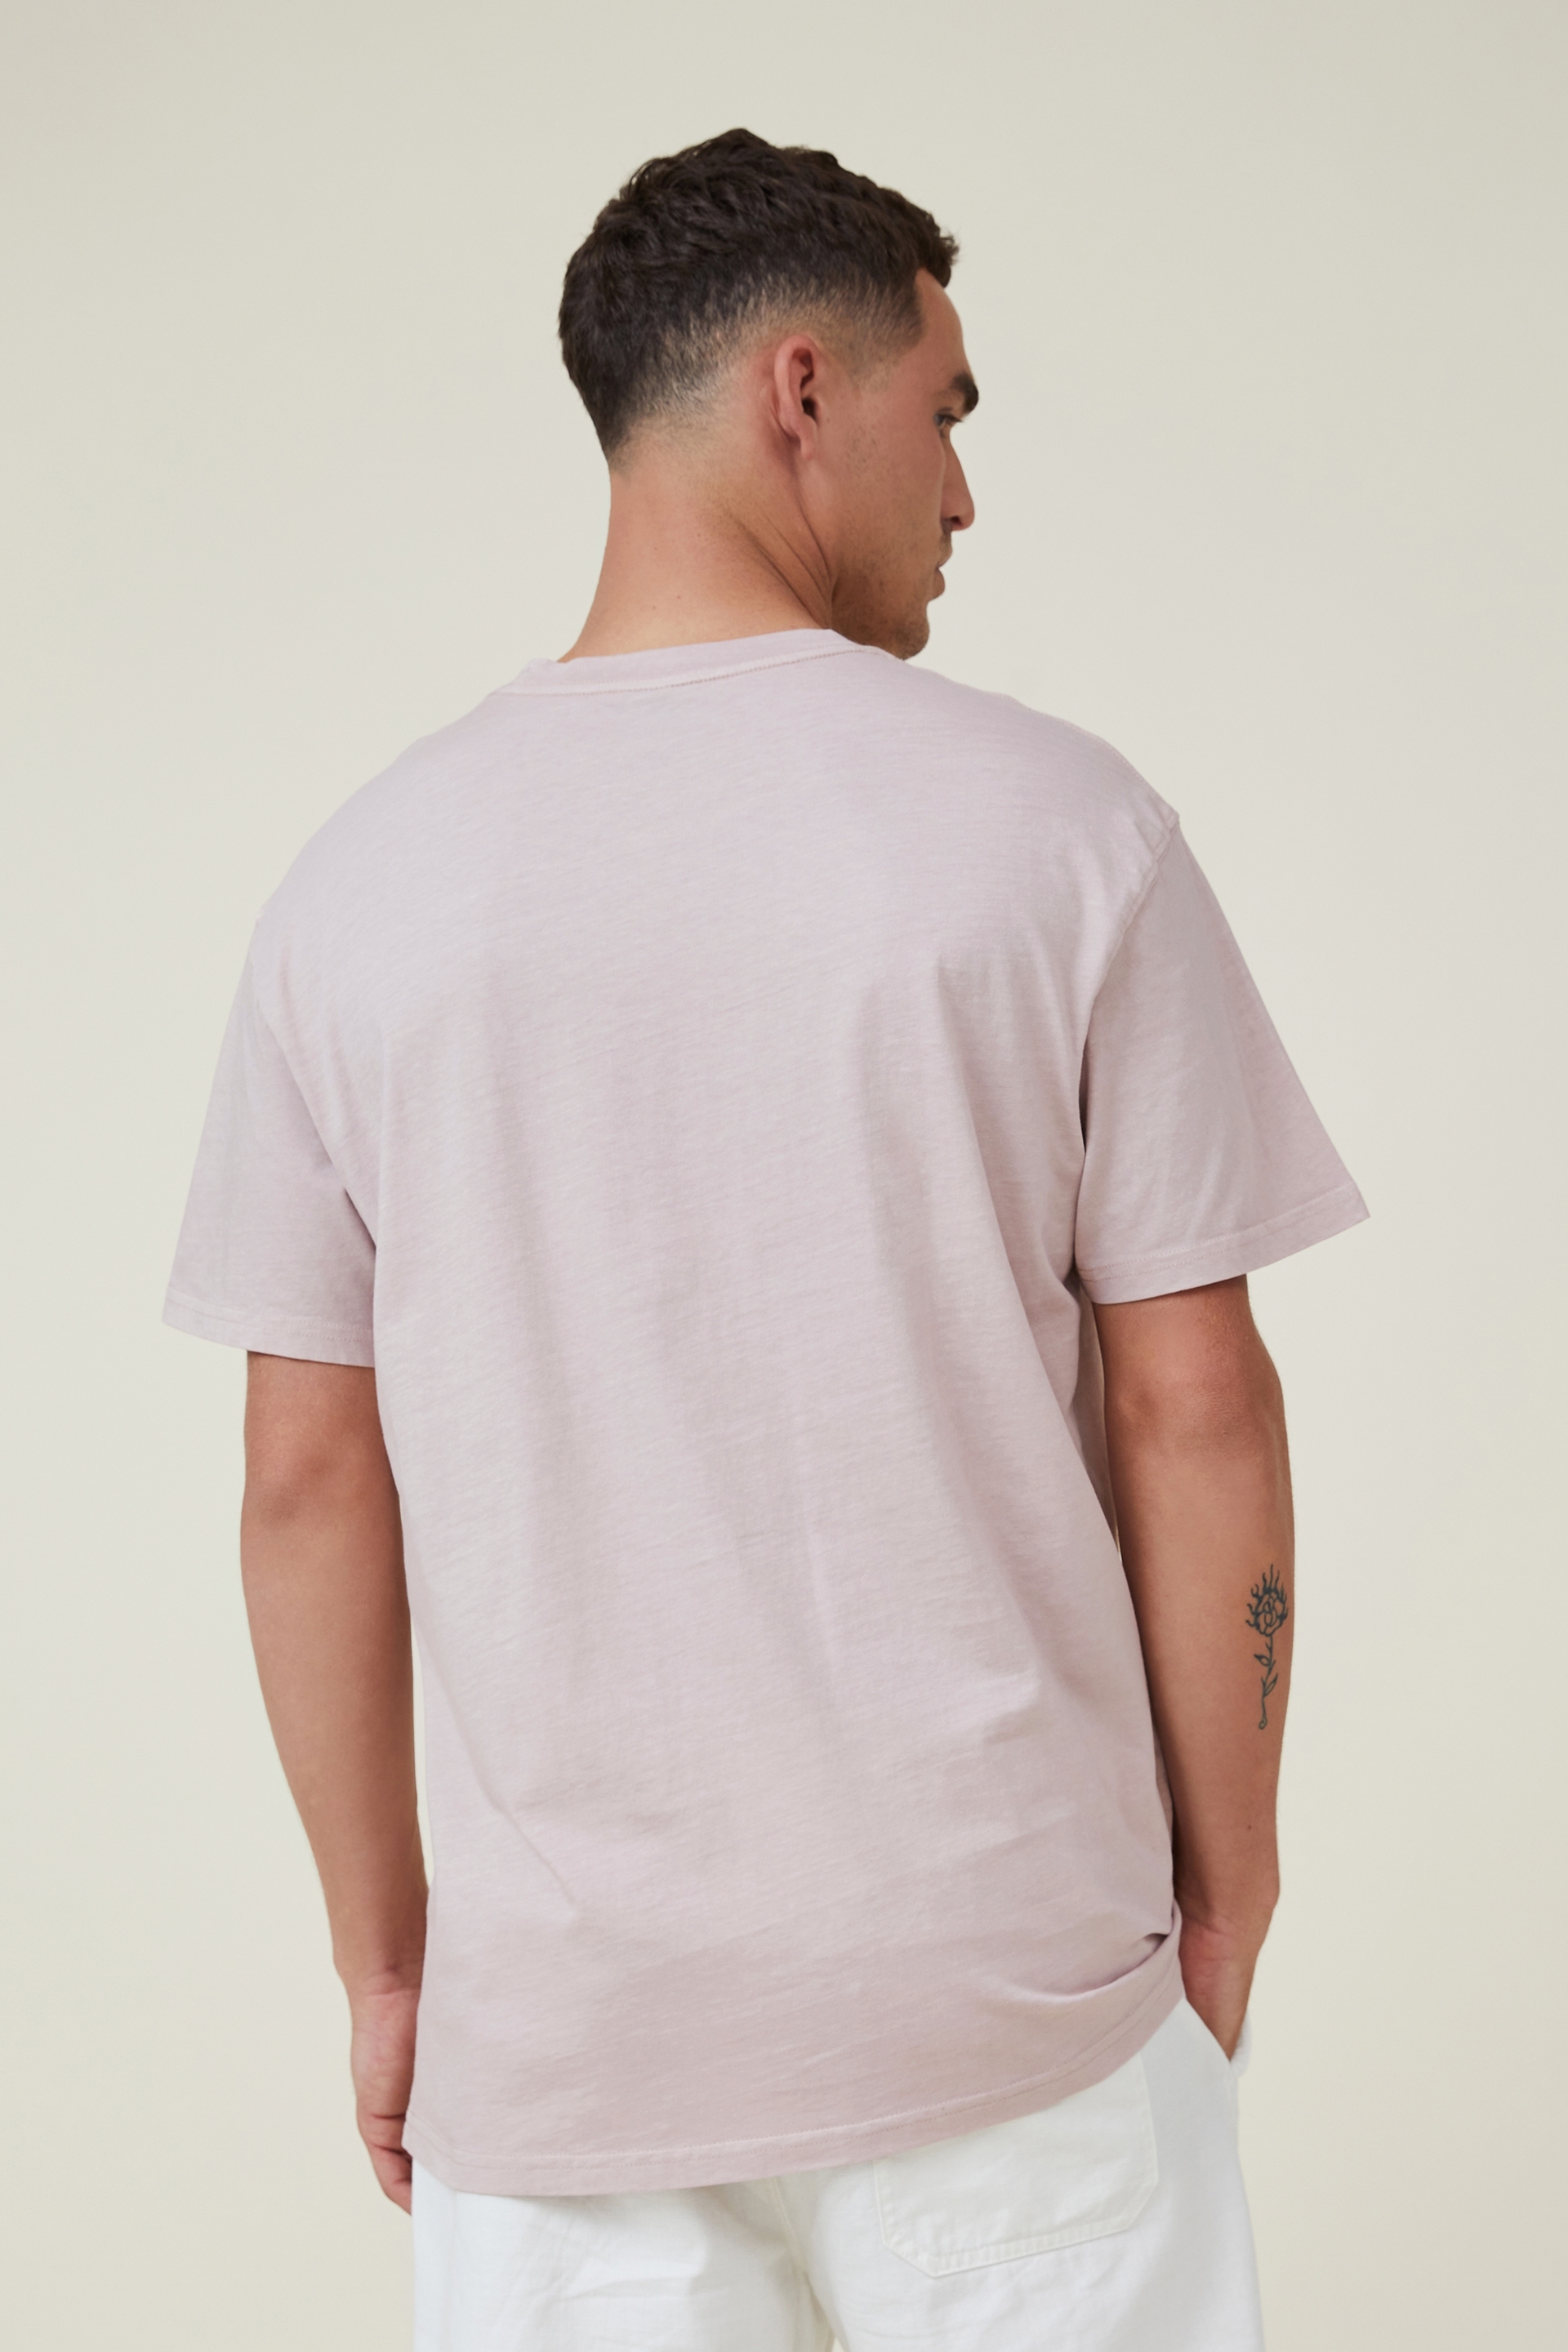 Cotton On Body - The Ultimate Comfort T-Shirt Bra + Denim never looked so  good 😍 #TapToShop XX #CottonOnBody @tesshomann SHOP >